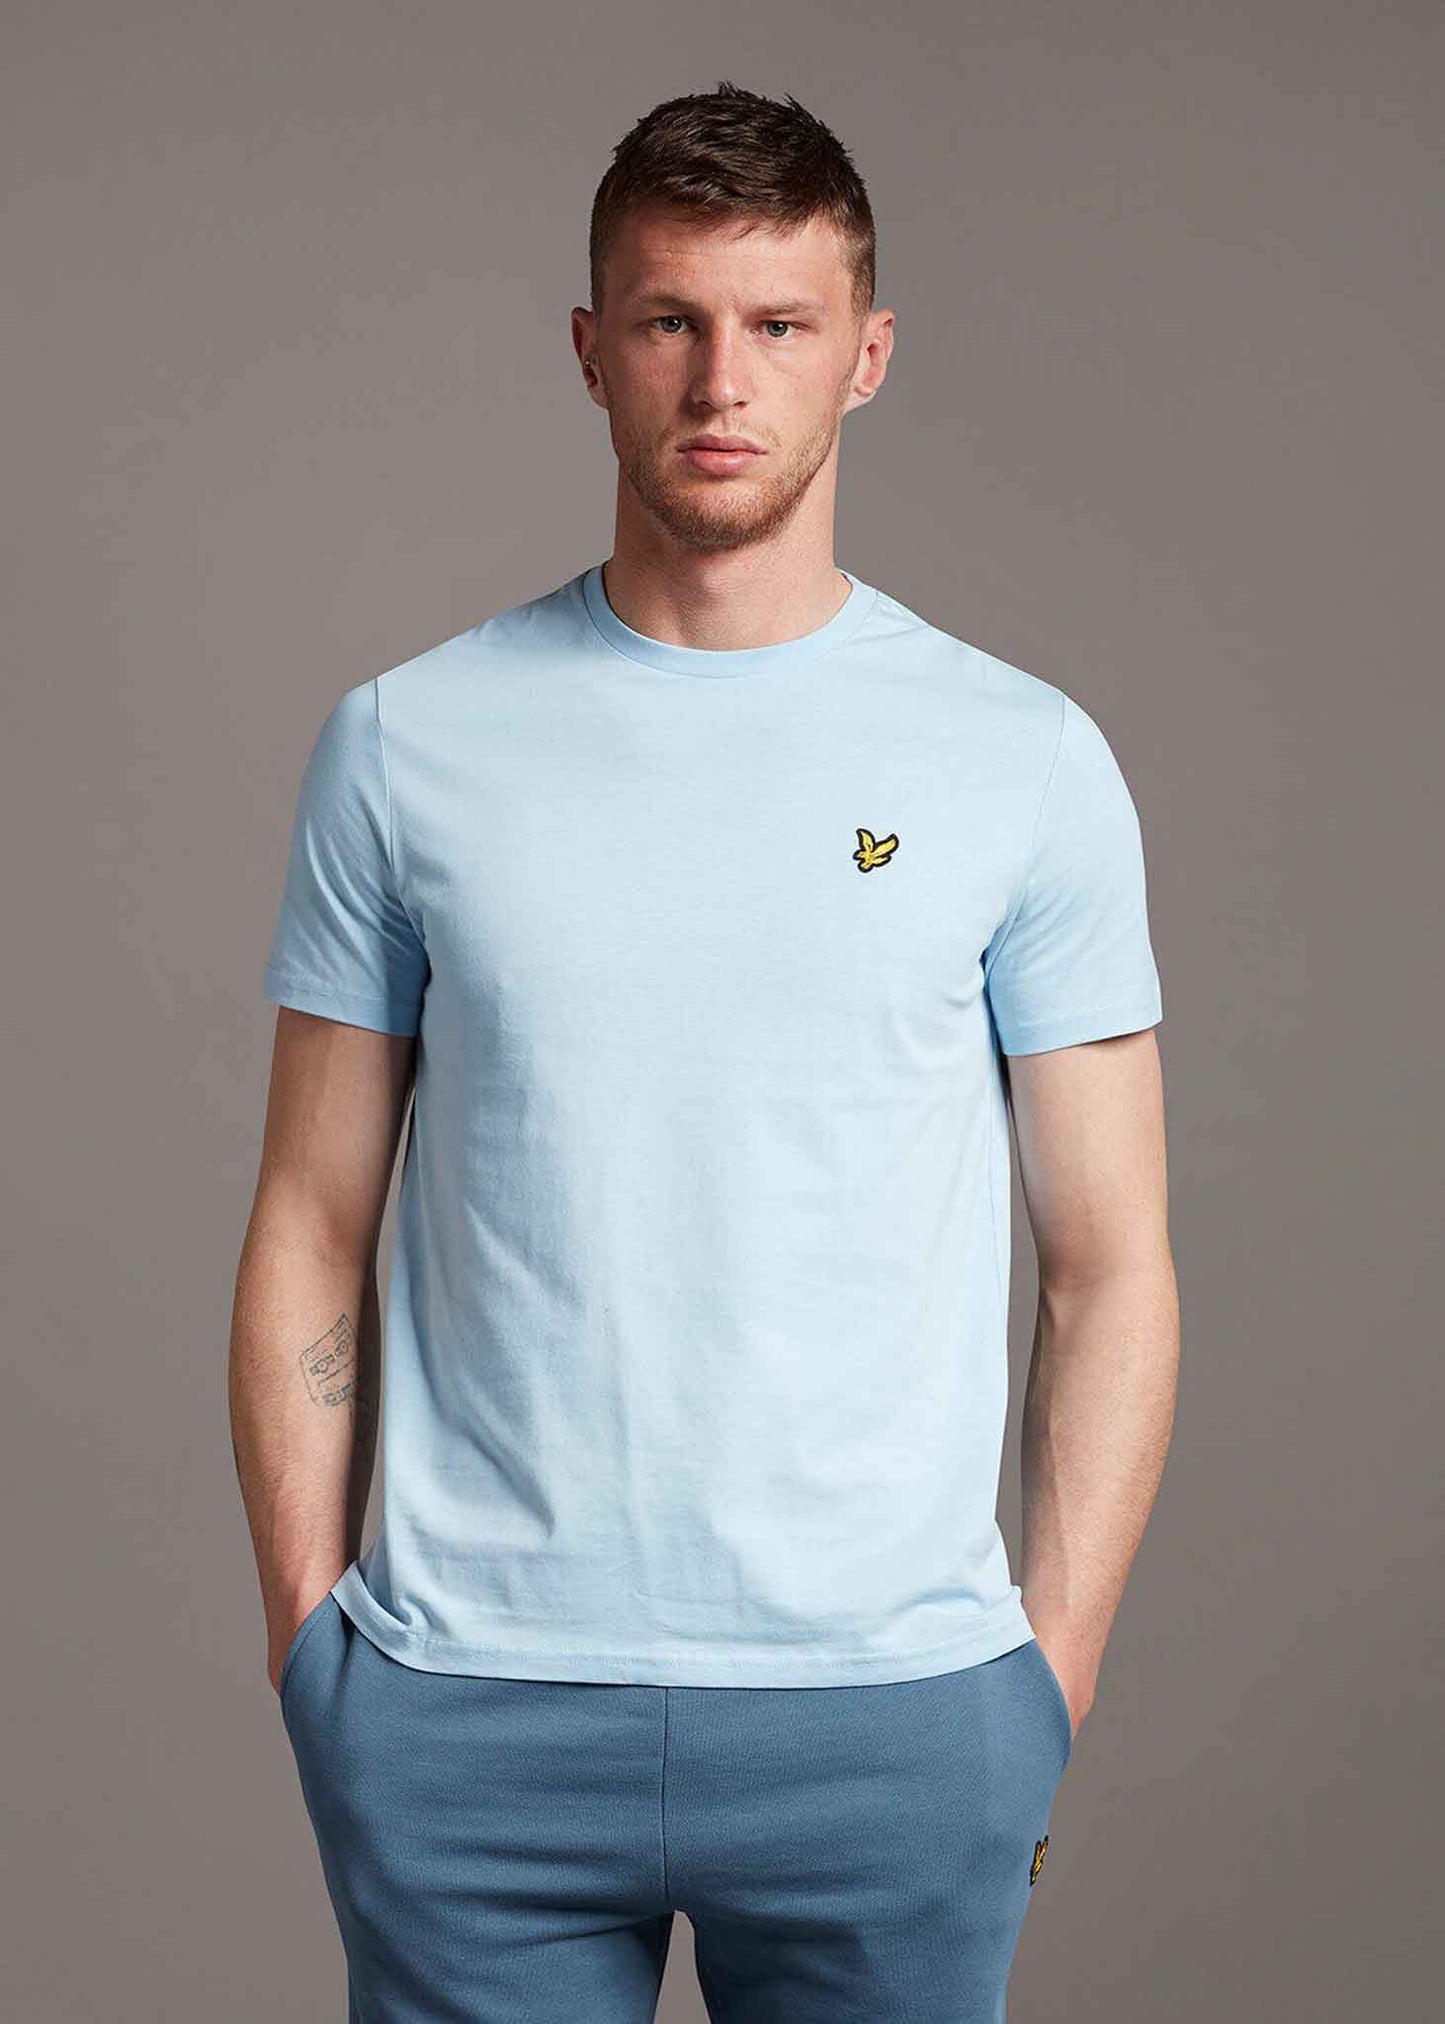 Plain t-shirt - light blue